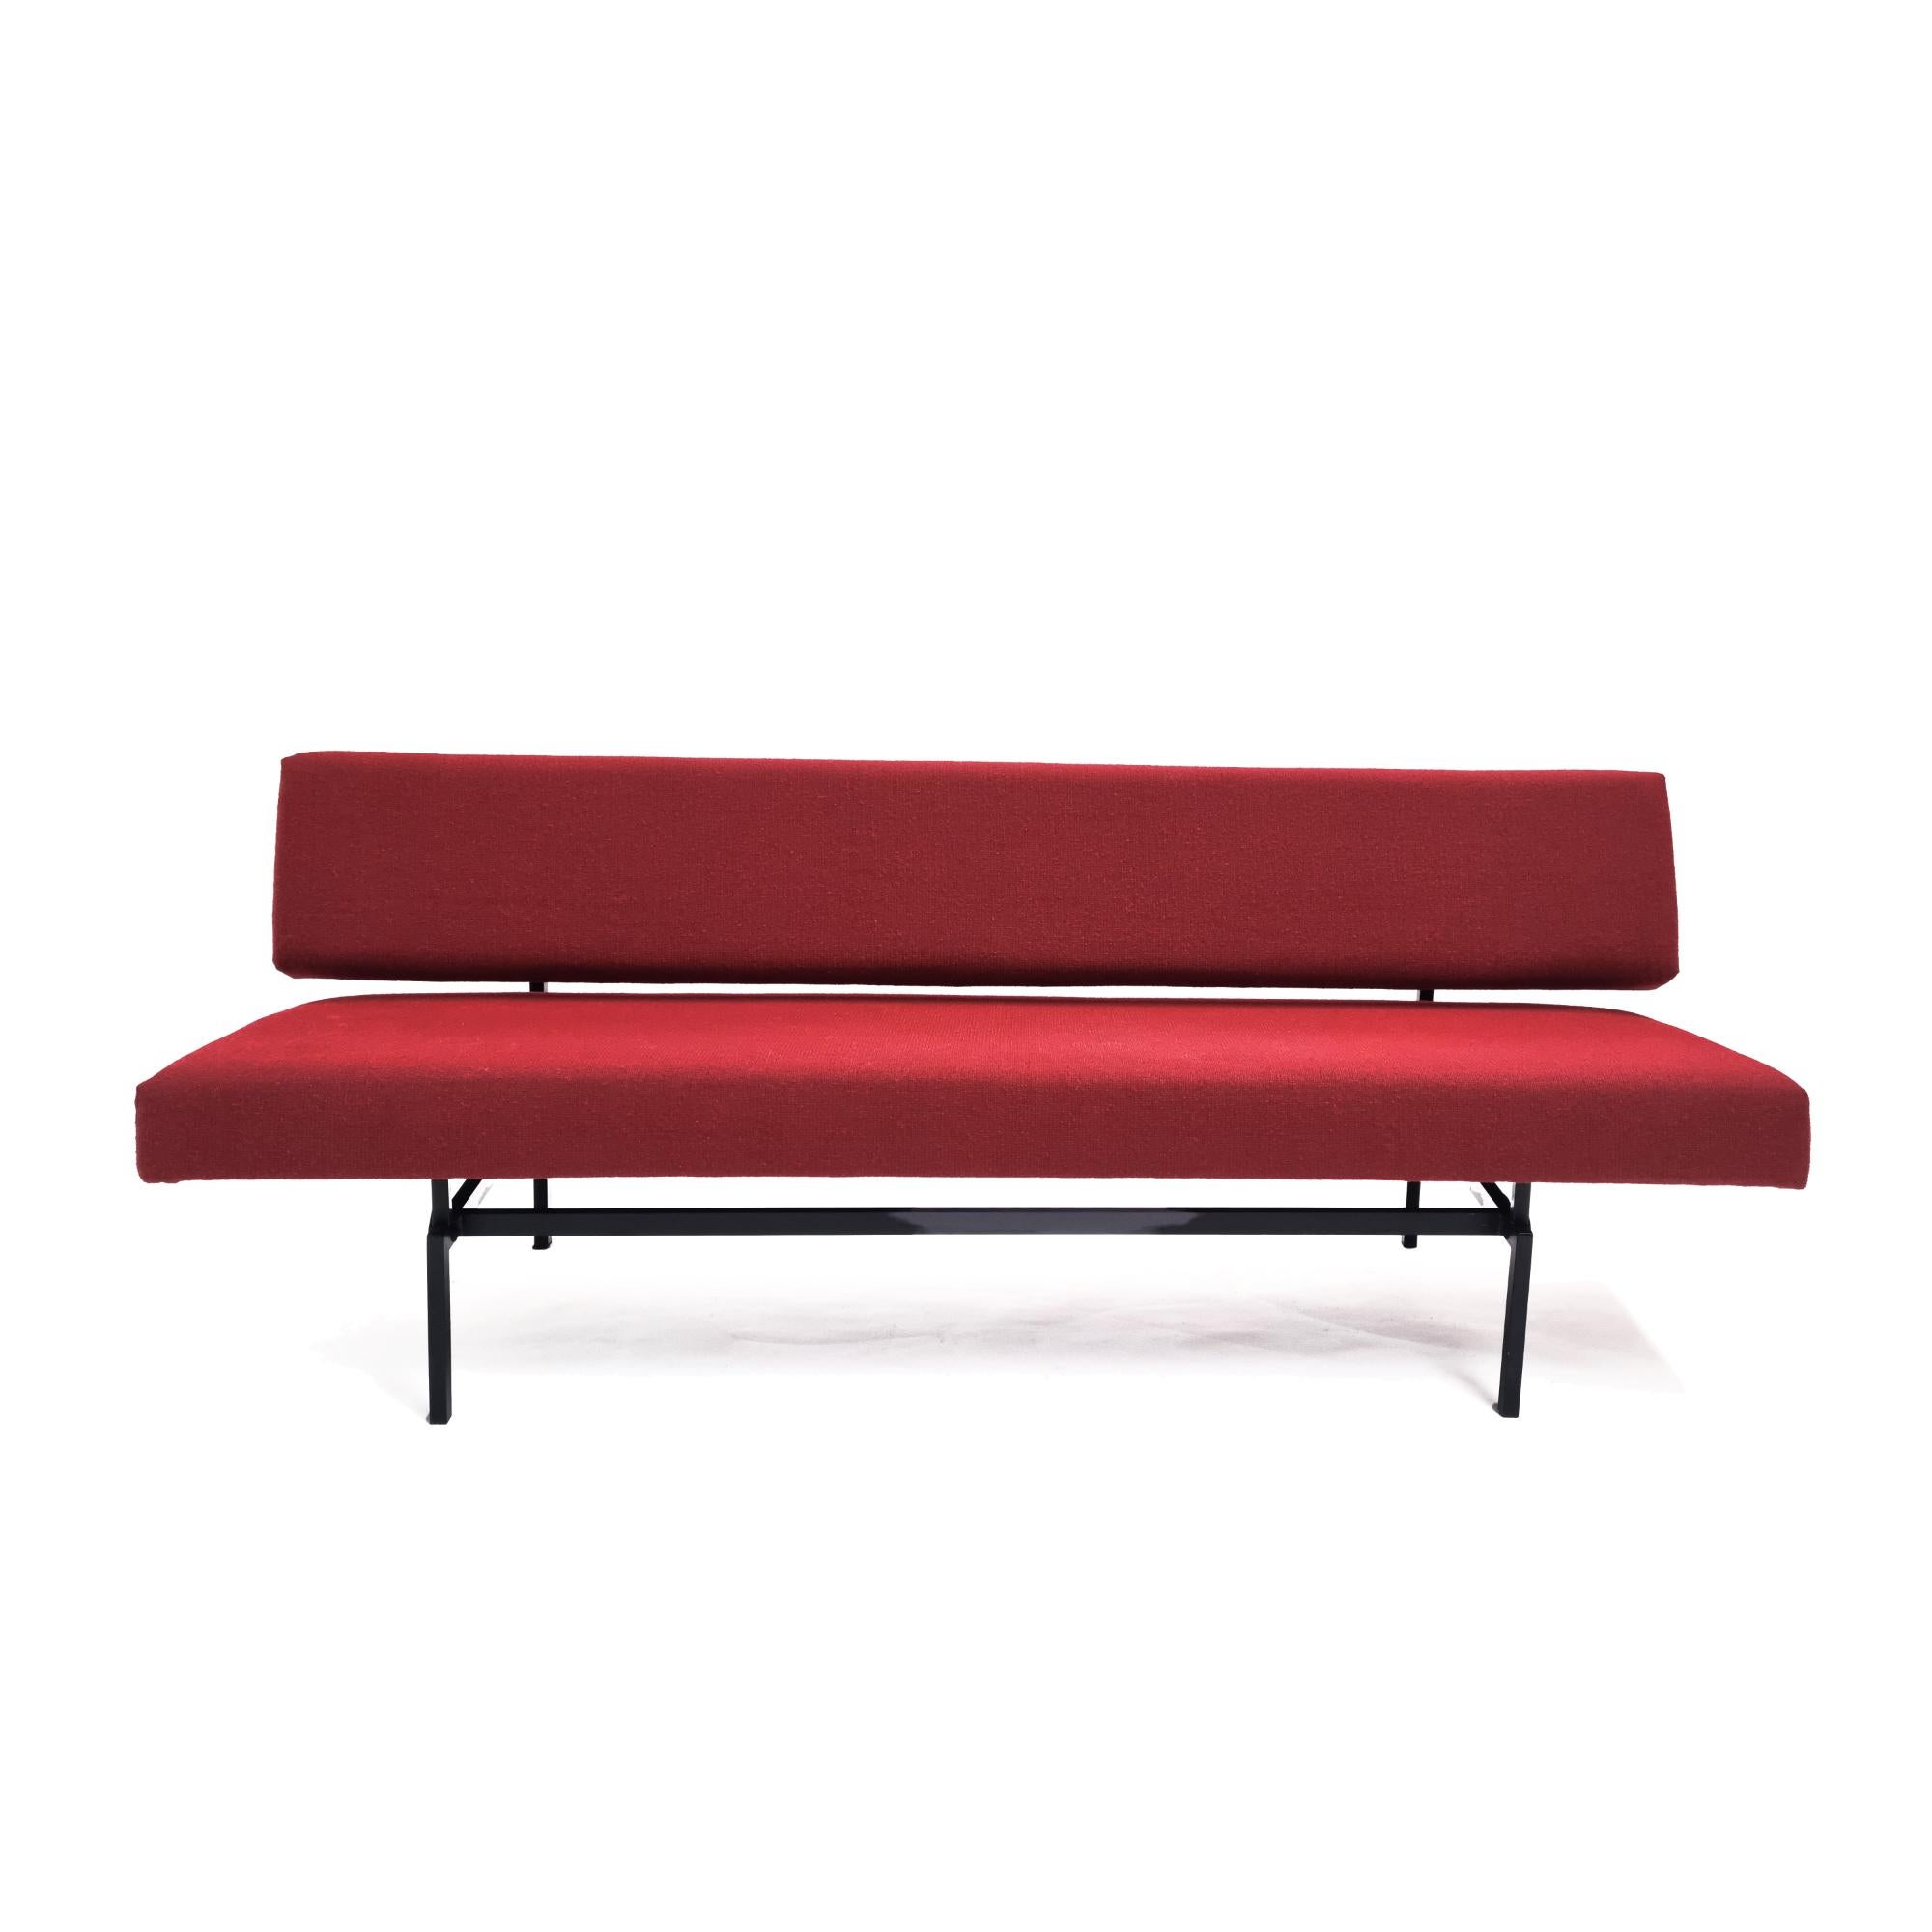 Sleeping Sofa by Martin Visser for ‘t Spectrum, 1960s For Sale 2